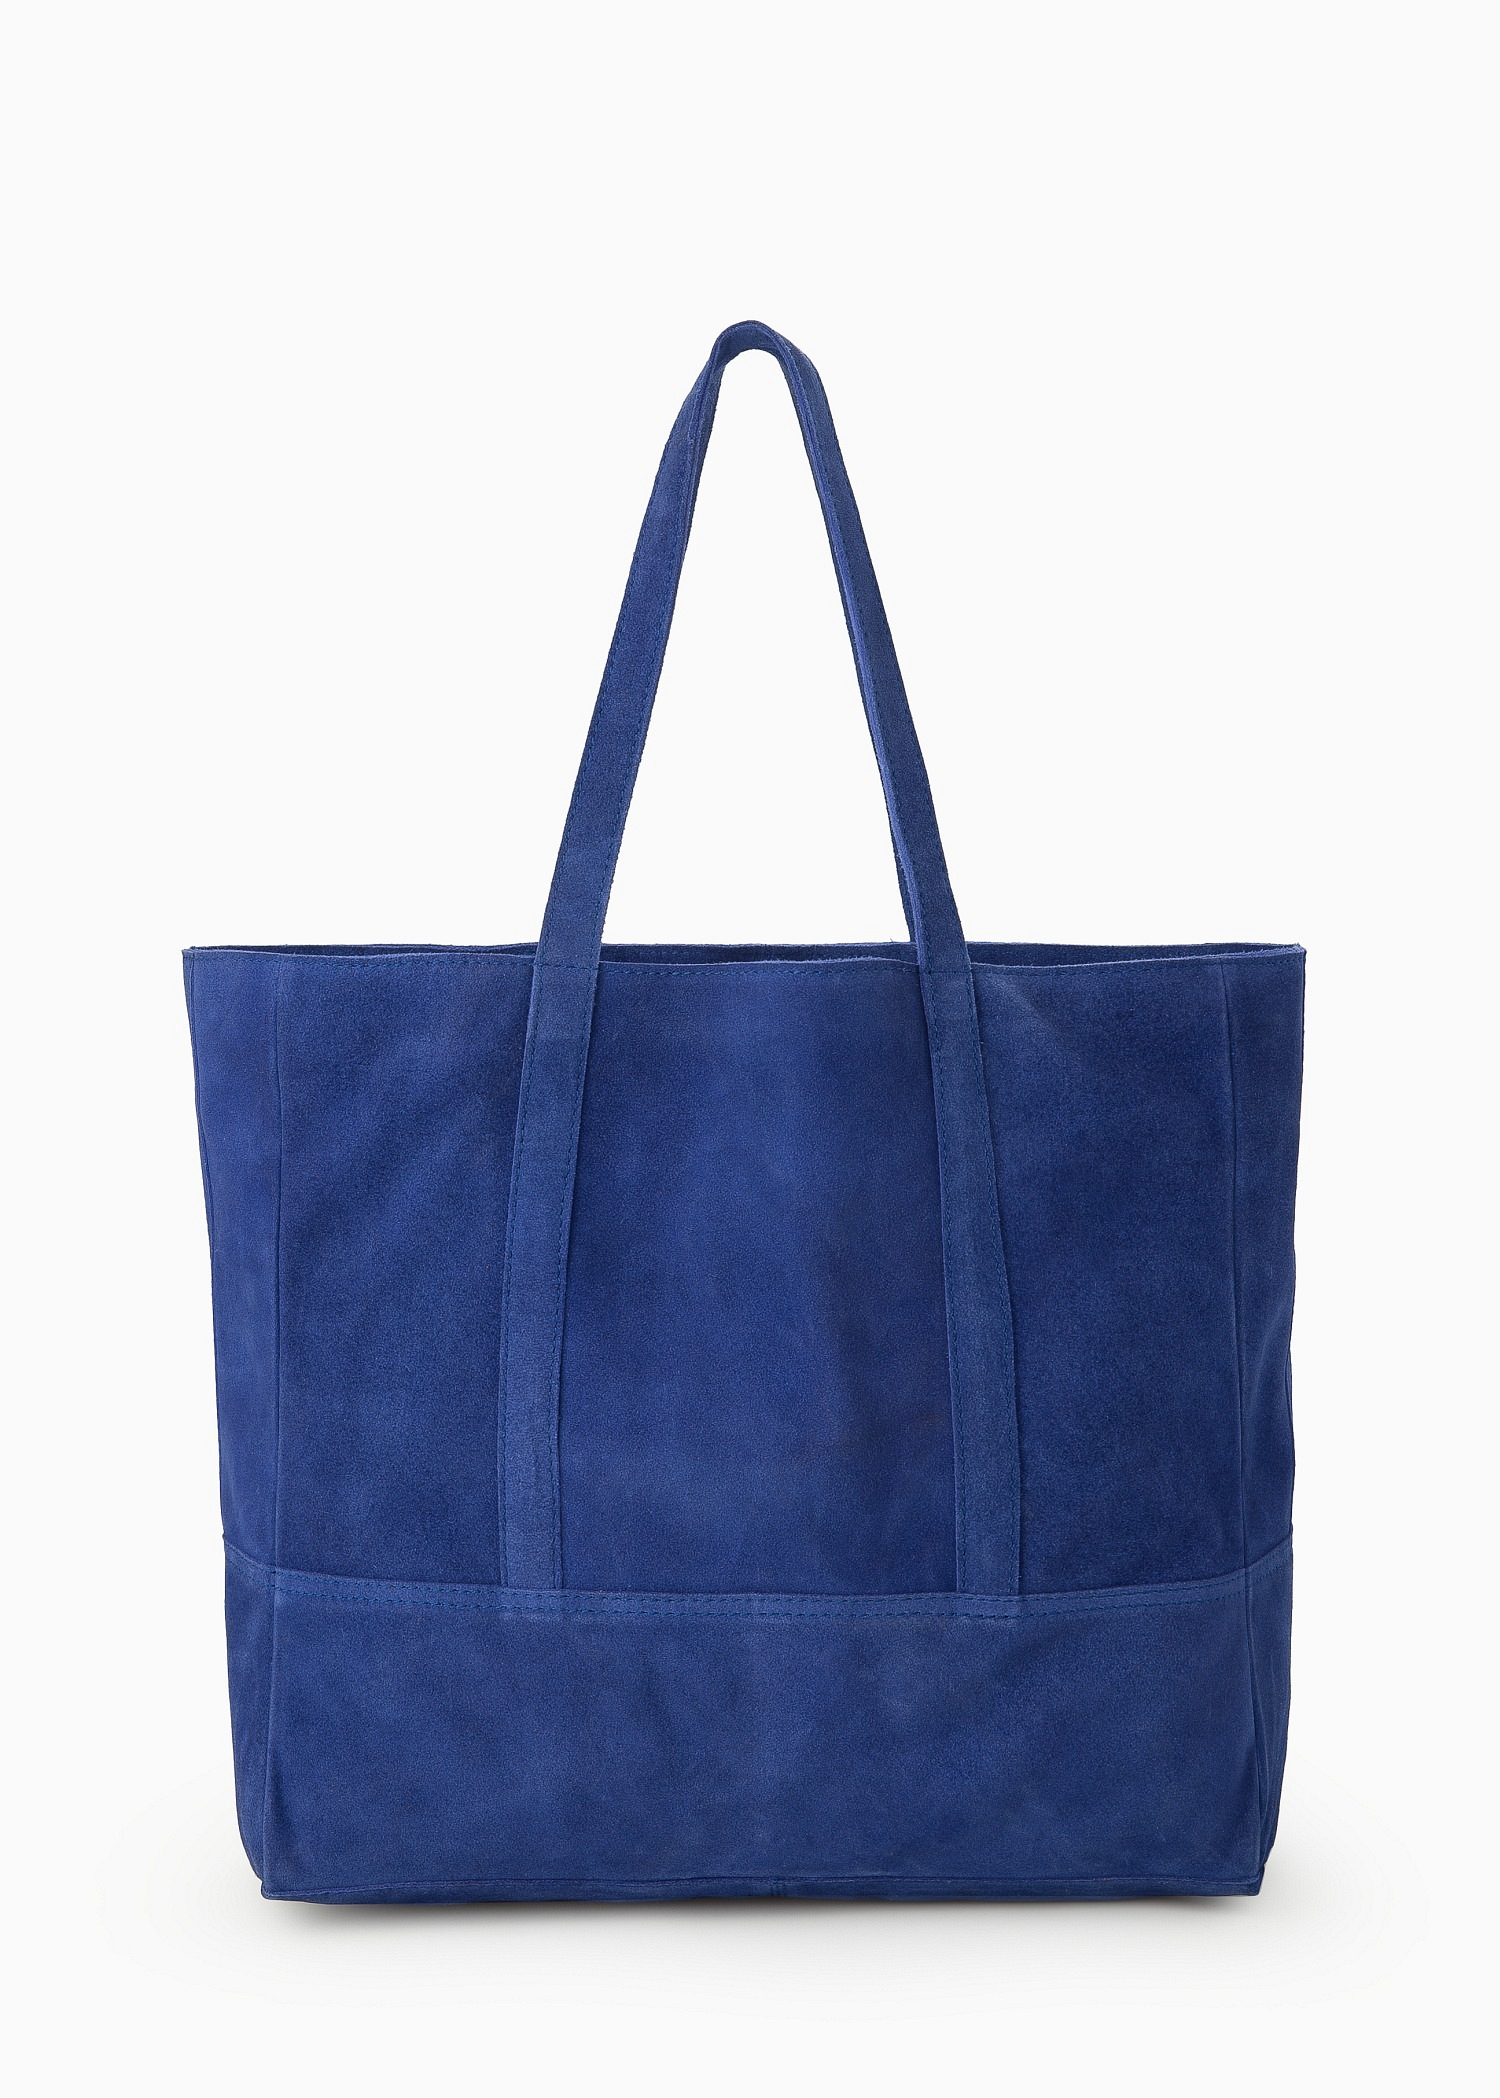 Mango Suede Shopper Bag in Blue - Lyst